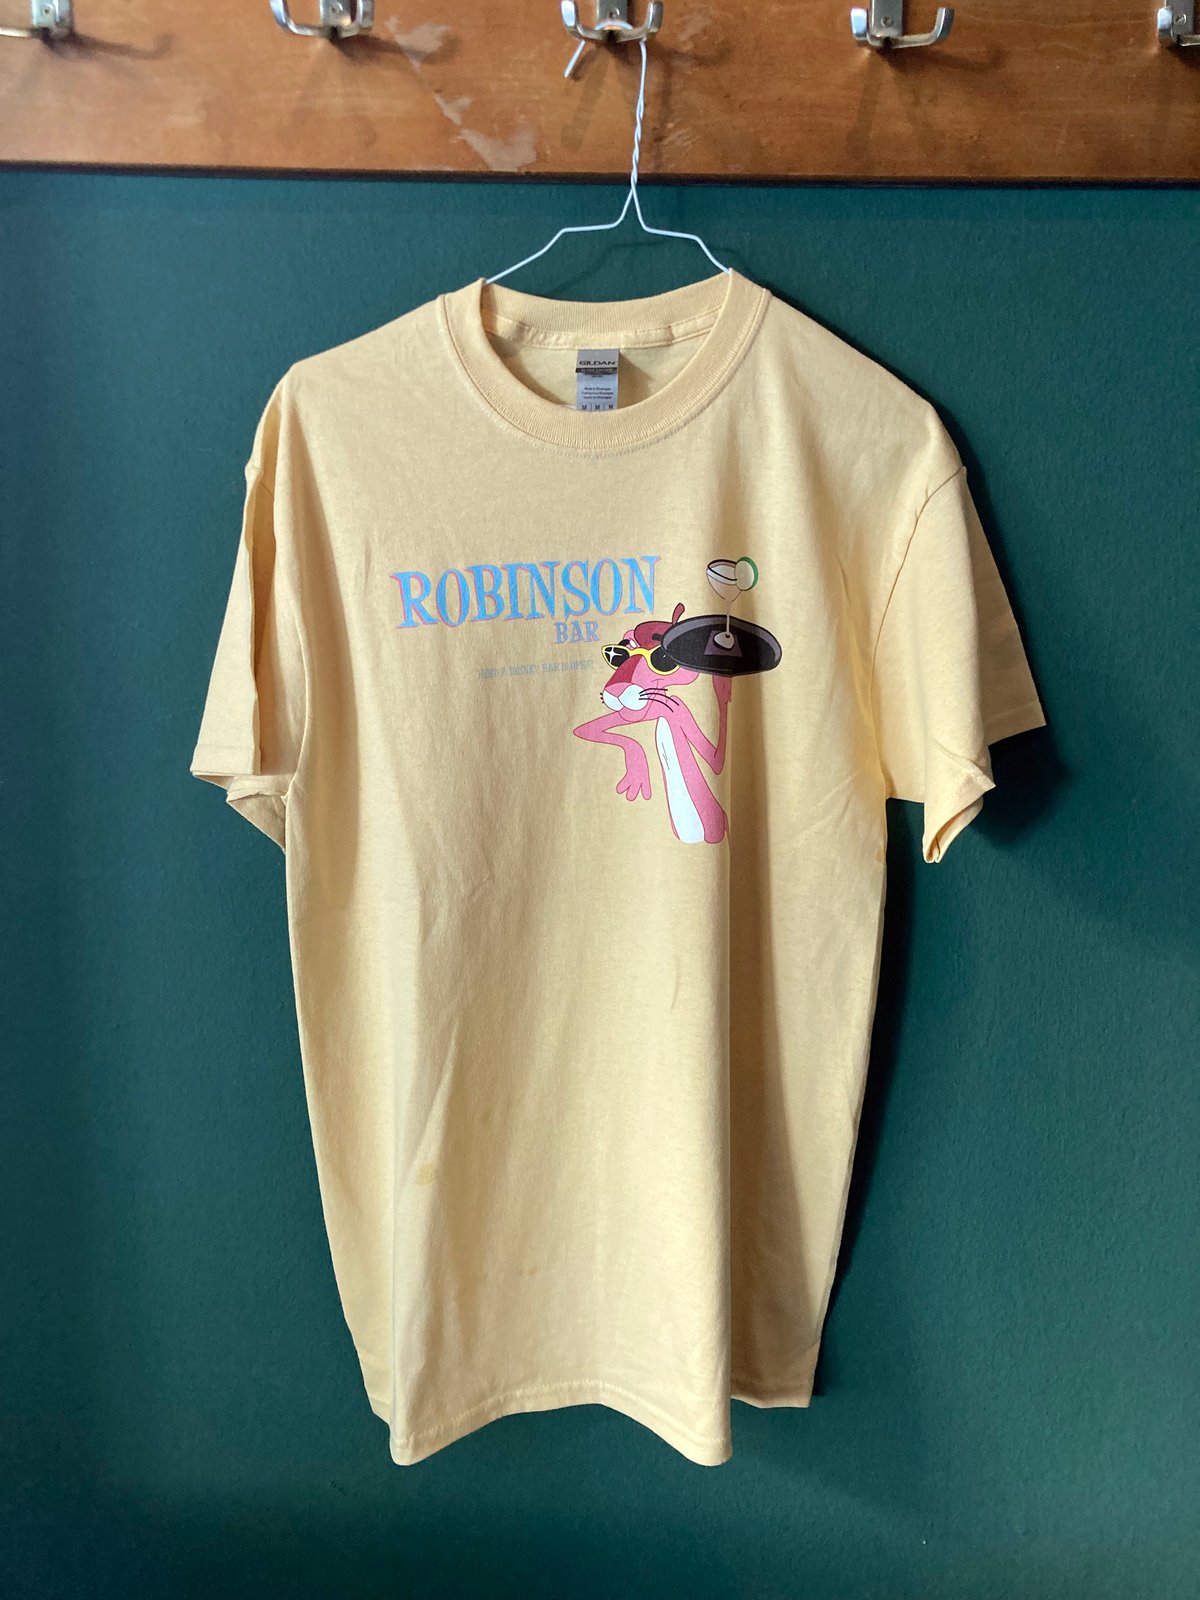 Image of Robinson Bar "Need a drink?" Paul P T-Shirt (dirty yellow)